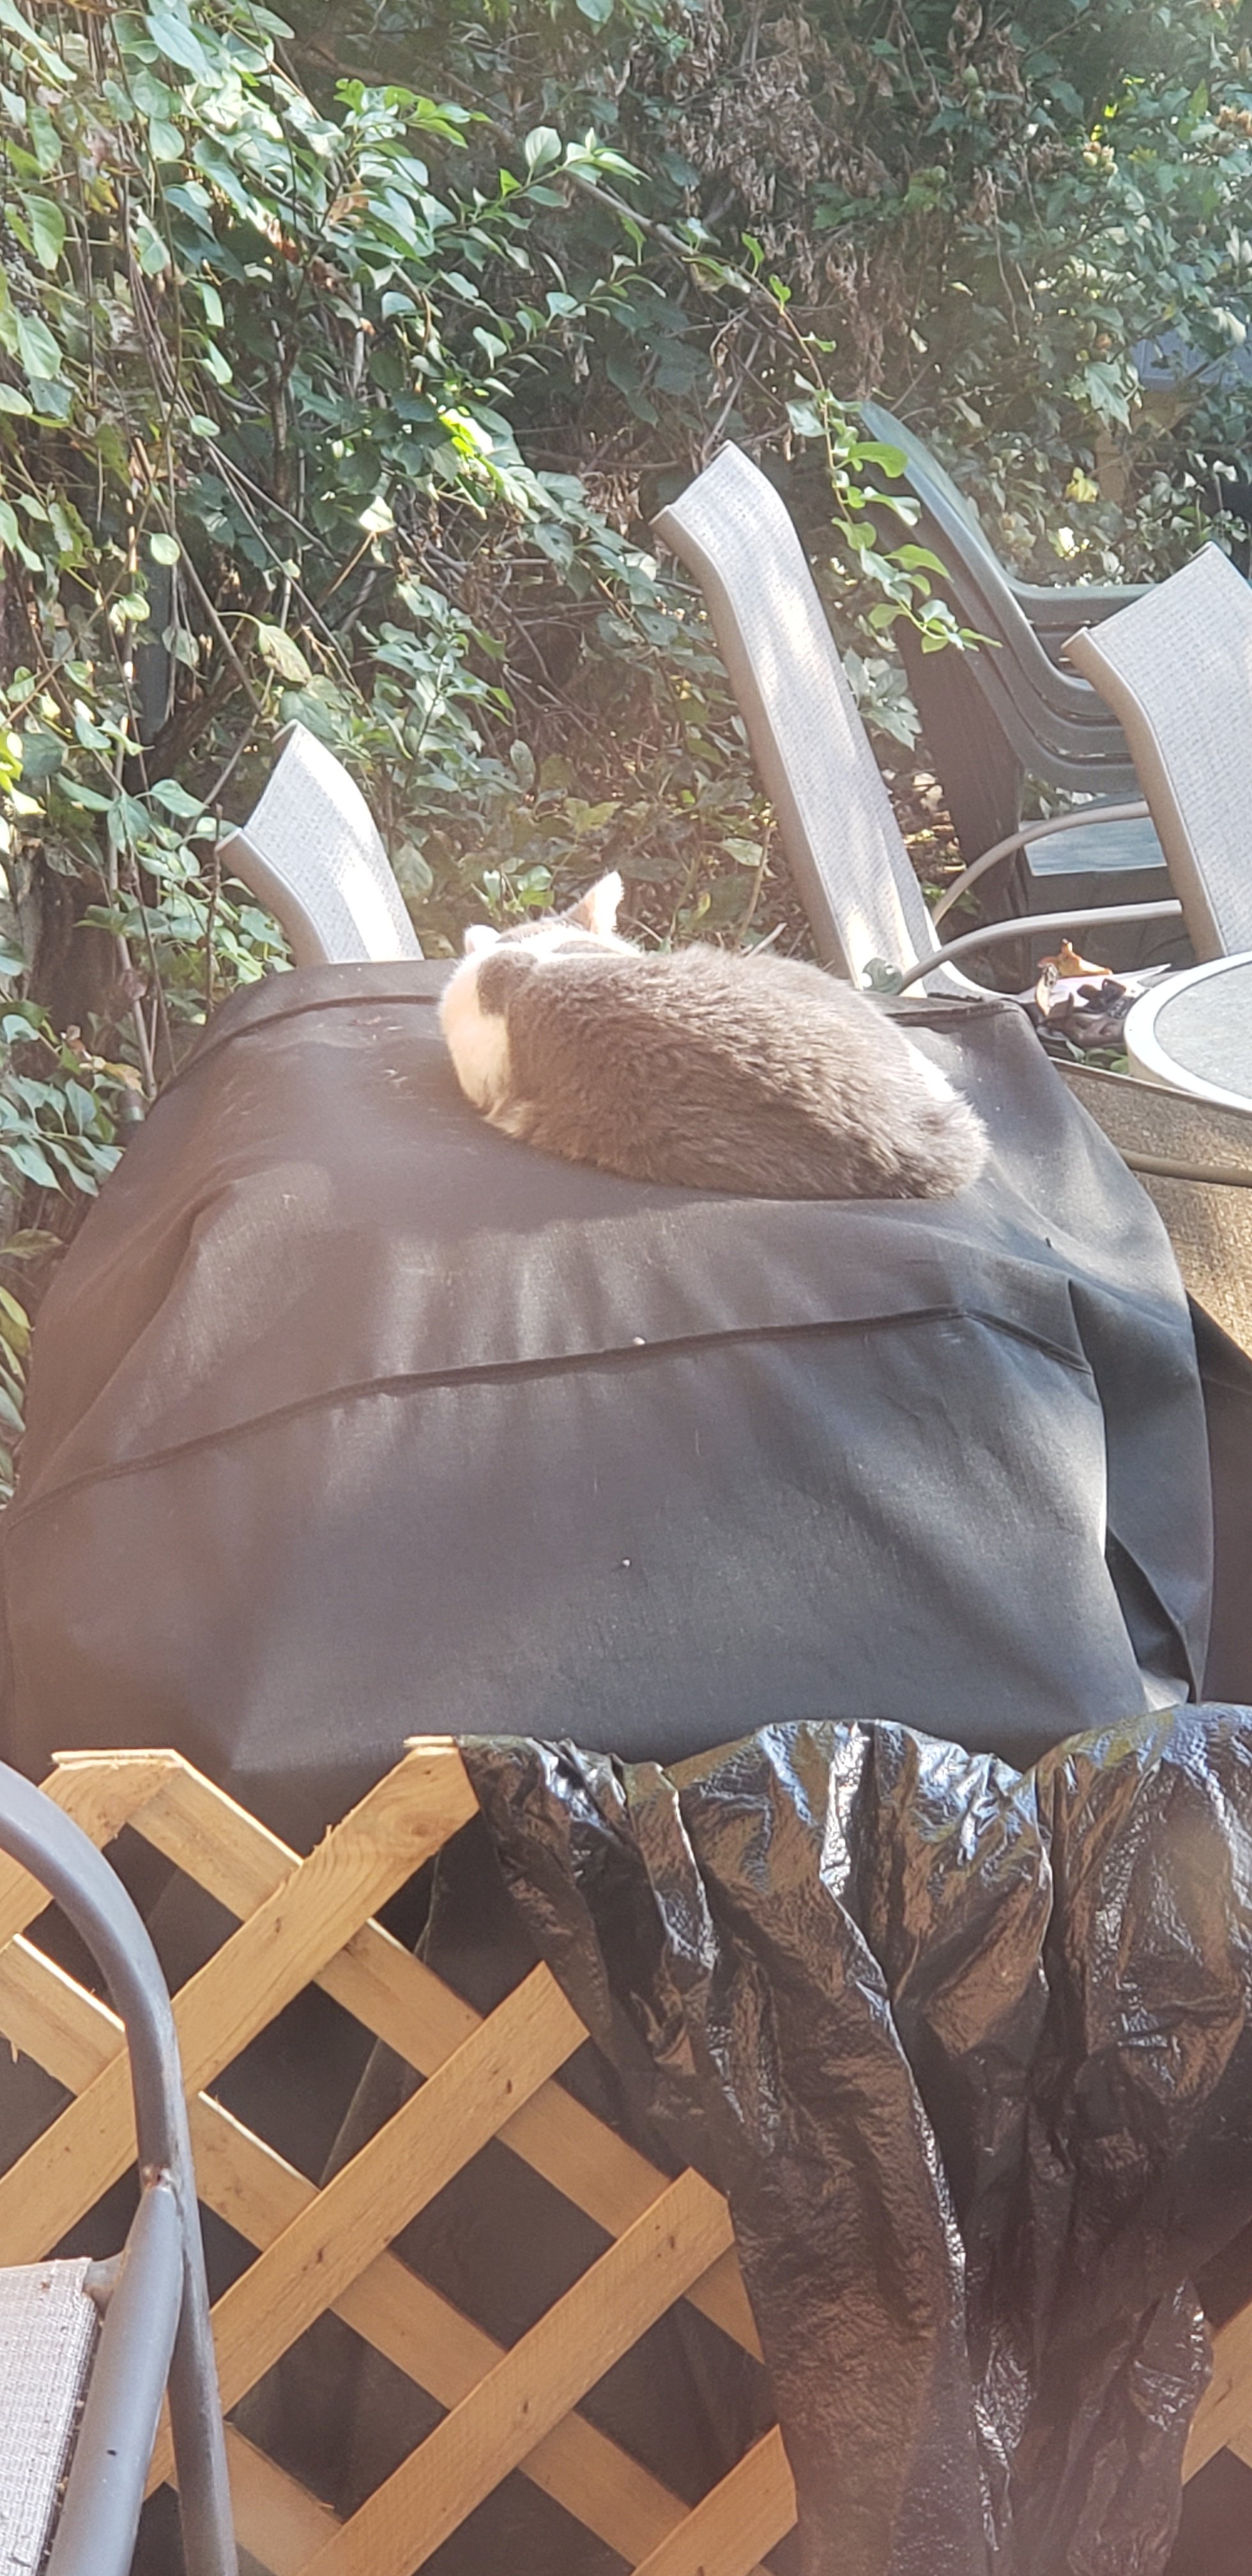 Cat sleeping on top of groll